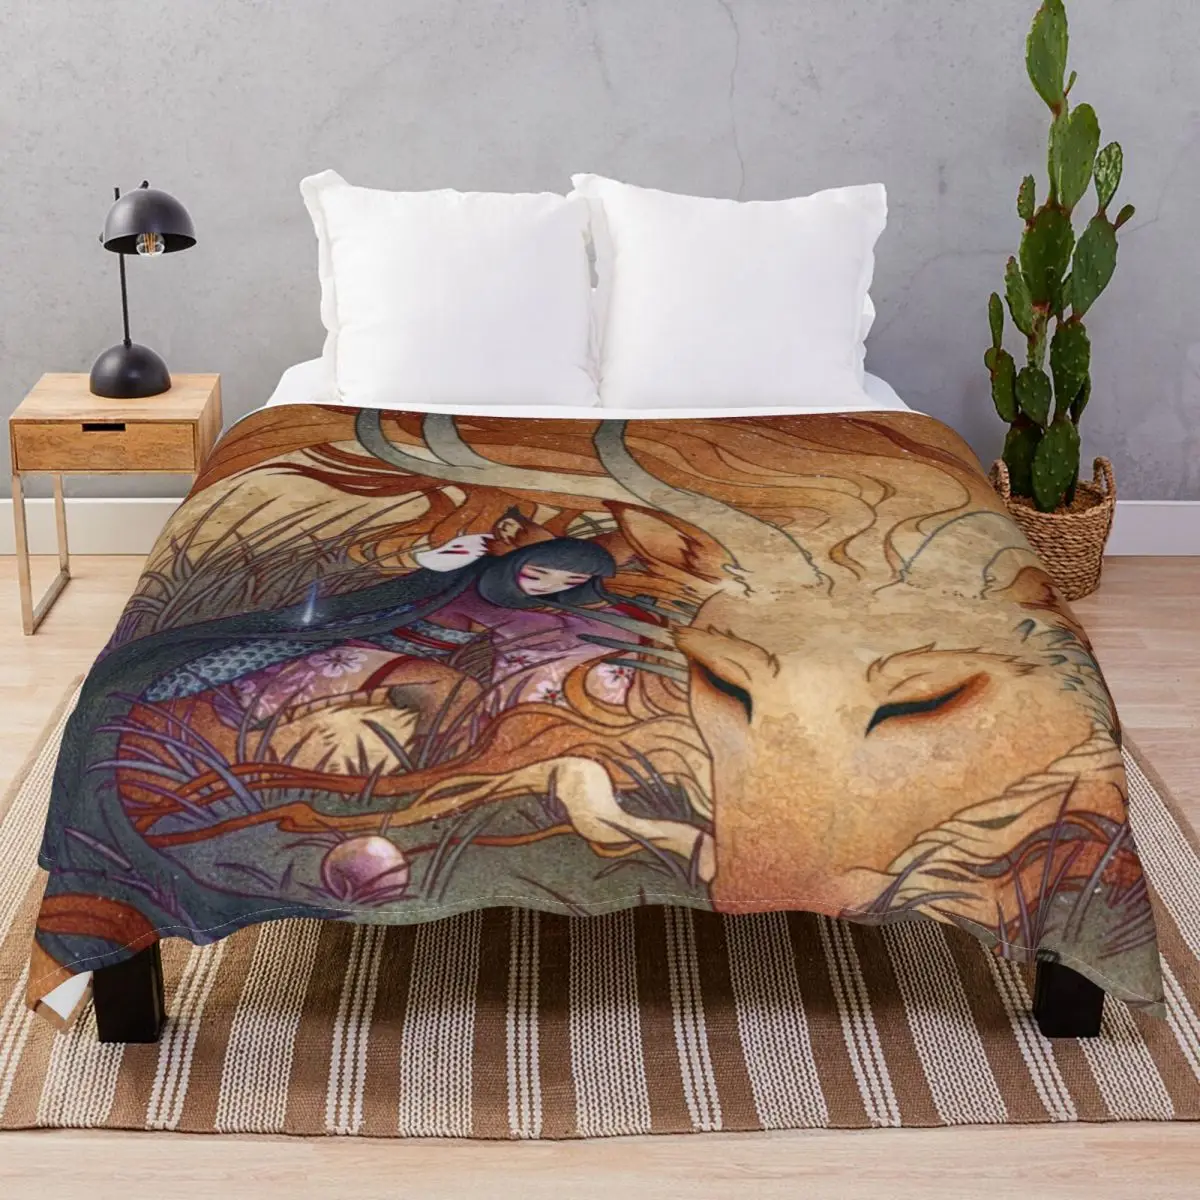 Slumber TeaKitsune Dragon Fox Blanket Fleece All Season Ultra-Soft Throw Blankets for Bedding Home Couch Travel Cinema